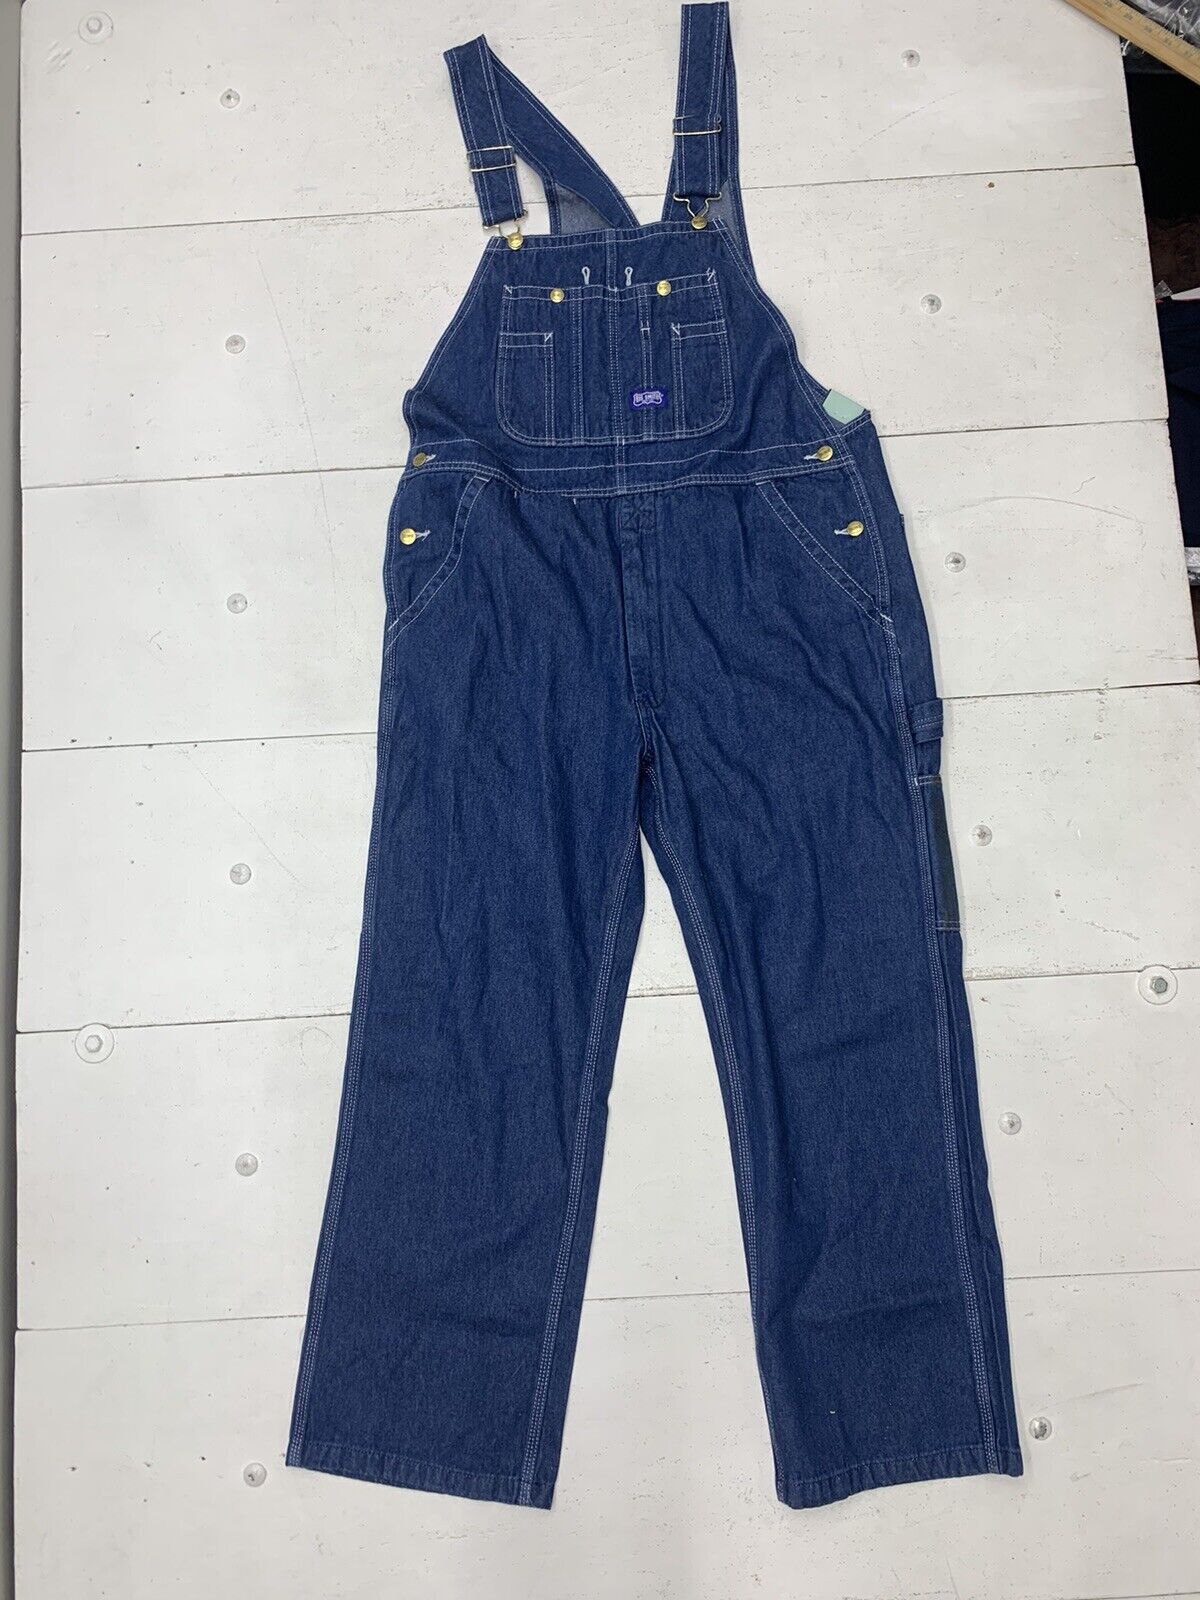 Buy LONGBIDA Men's Denim Bib Overalls Fashion Slim Fit Jumpsuit with  Pockets(Light Blue,XL) at Amazon.in